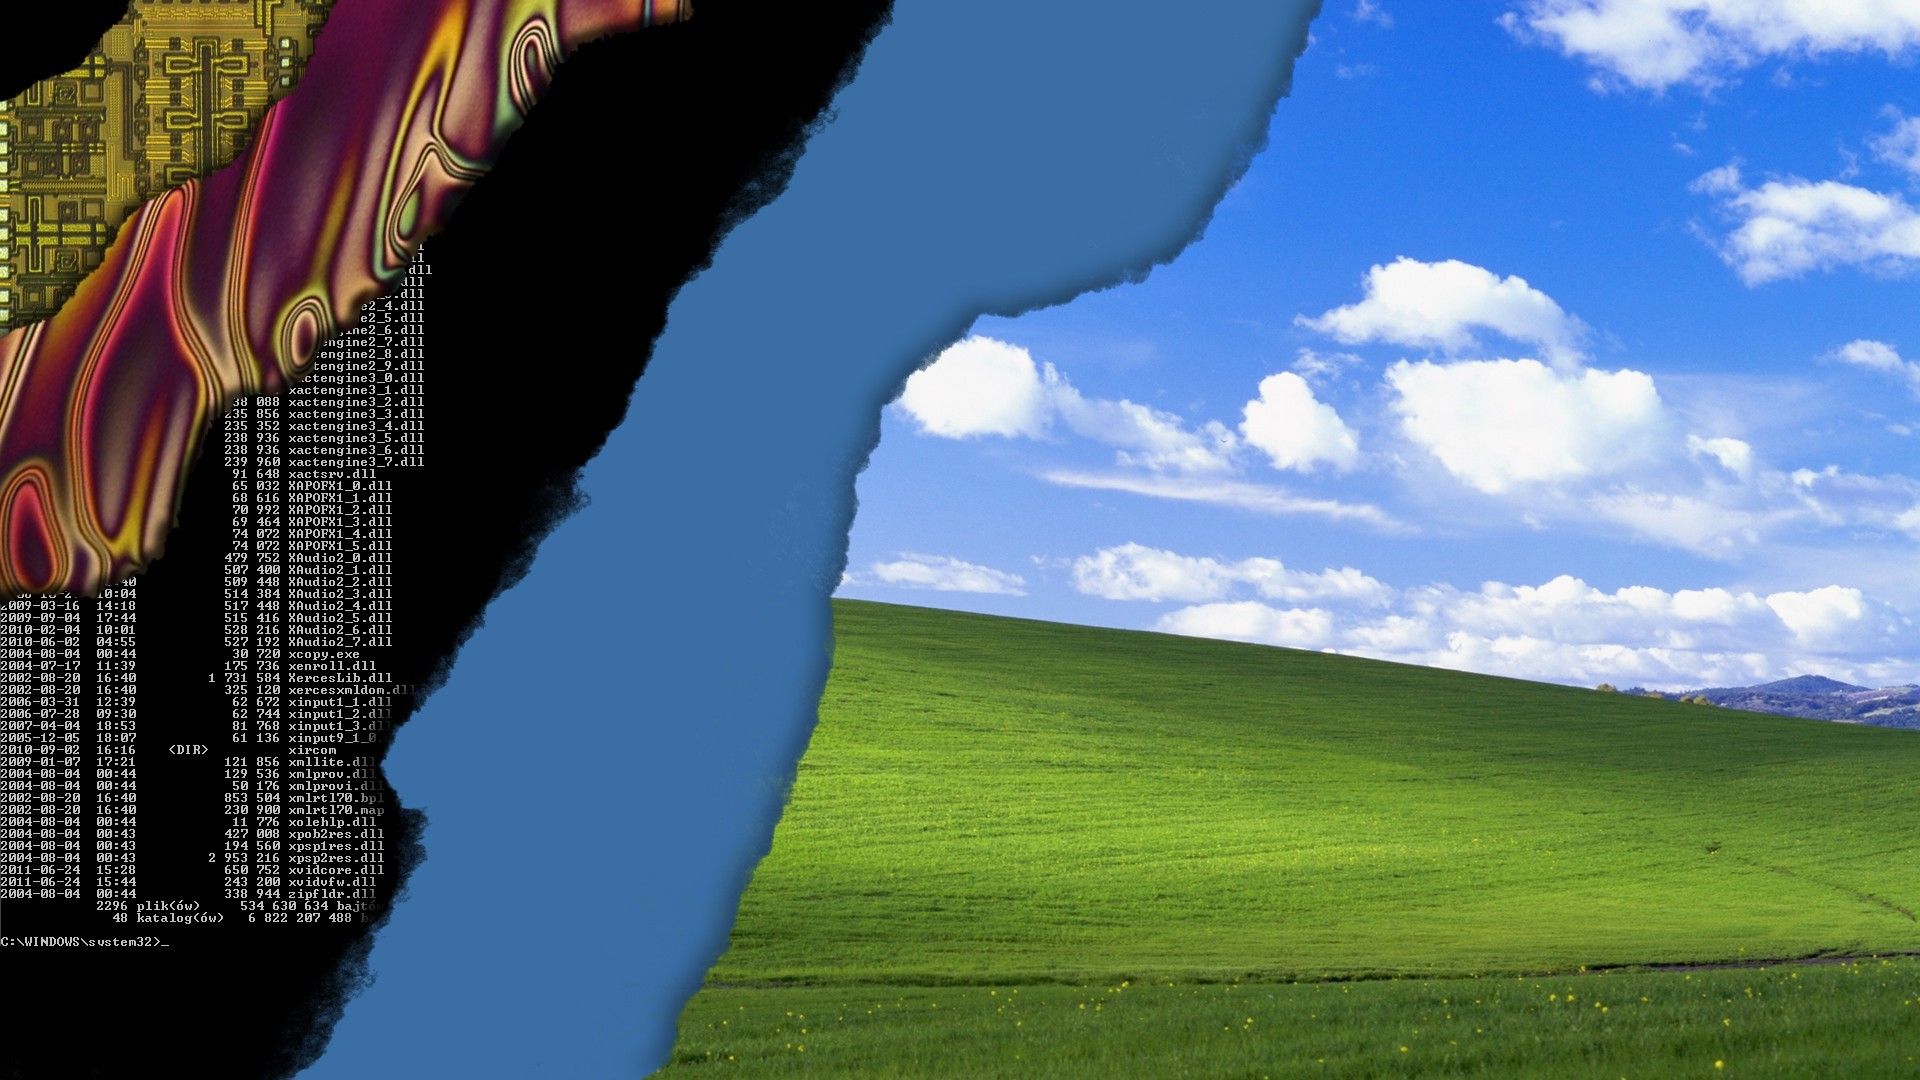 Fondos de pantalla para Windows XP - FondosMil